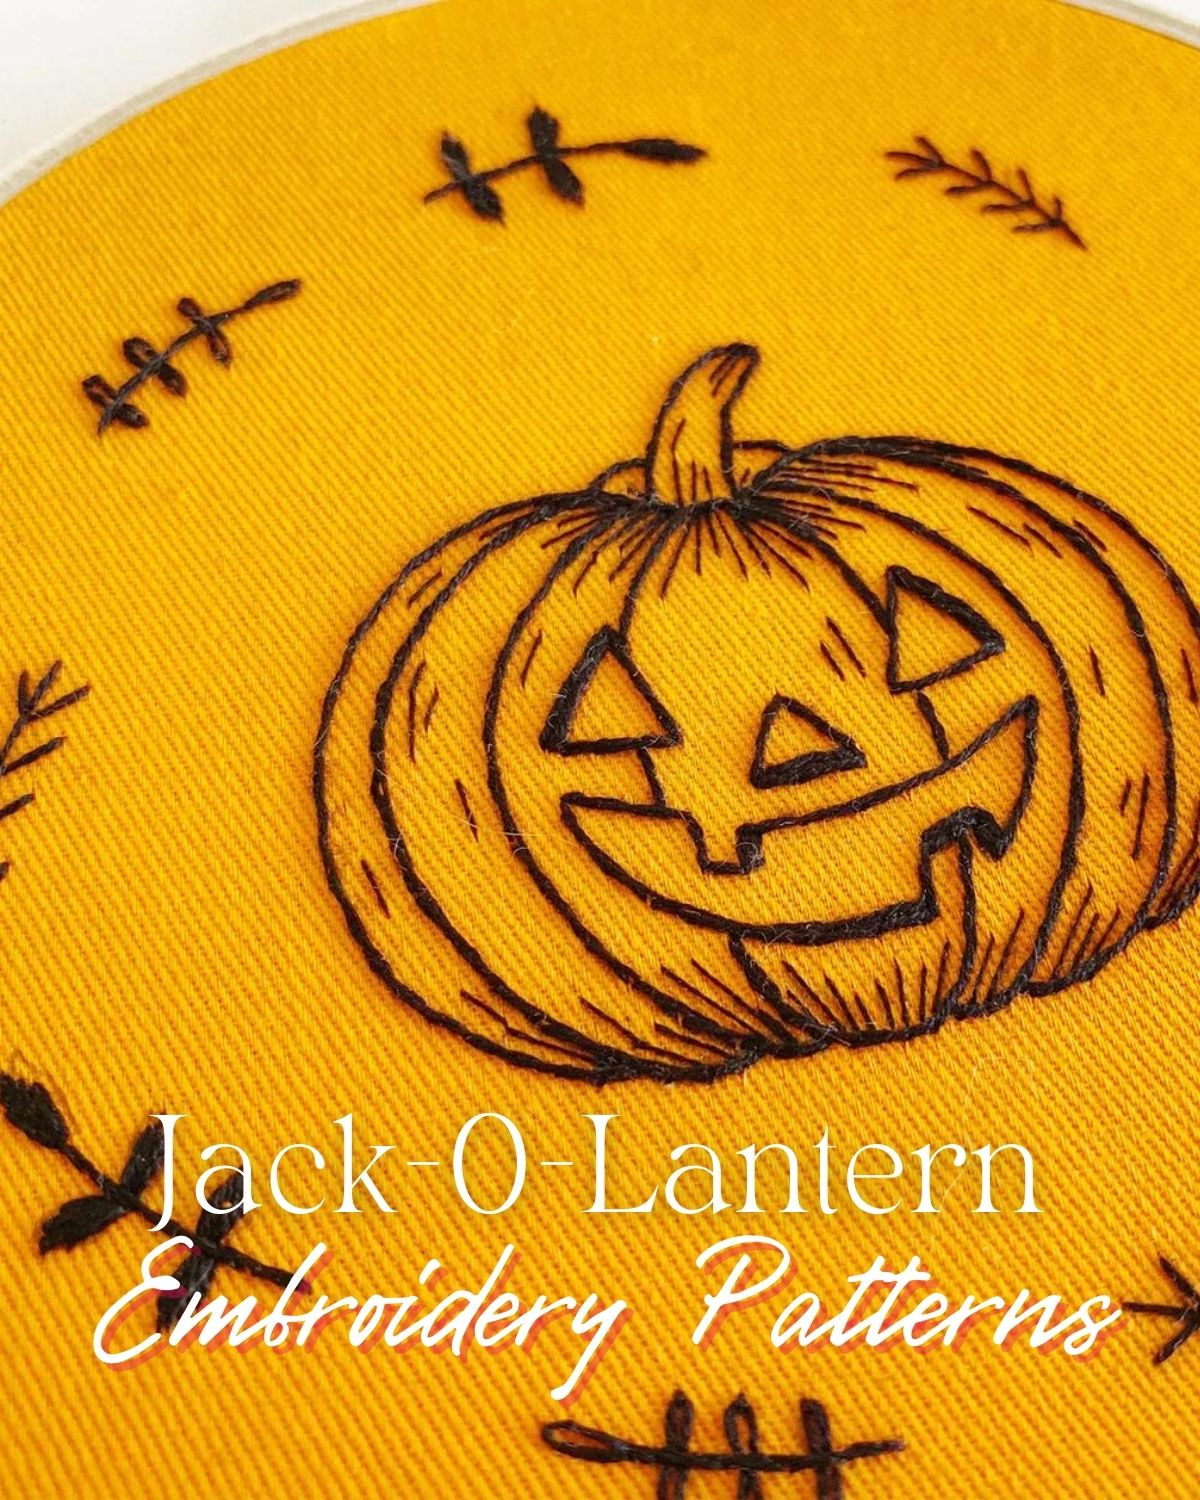 A jack-o-lantern embroidery piece with black thread on orange background